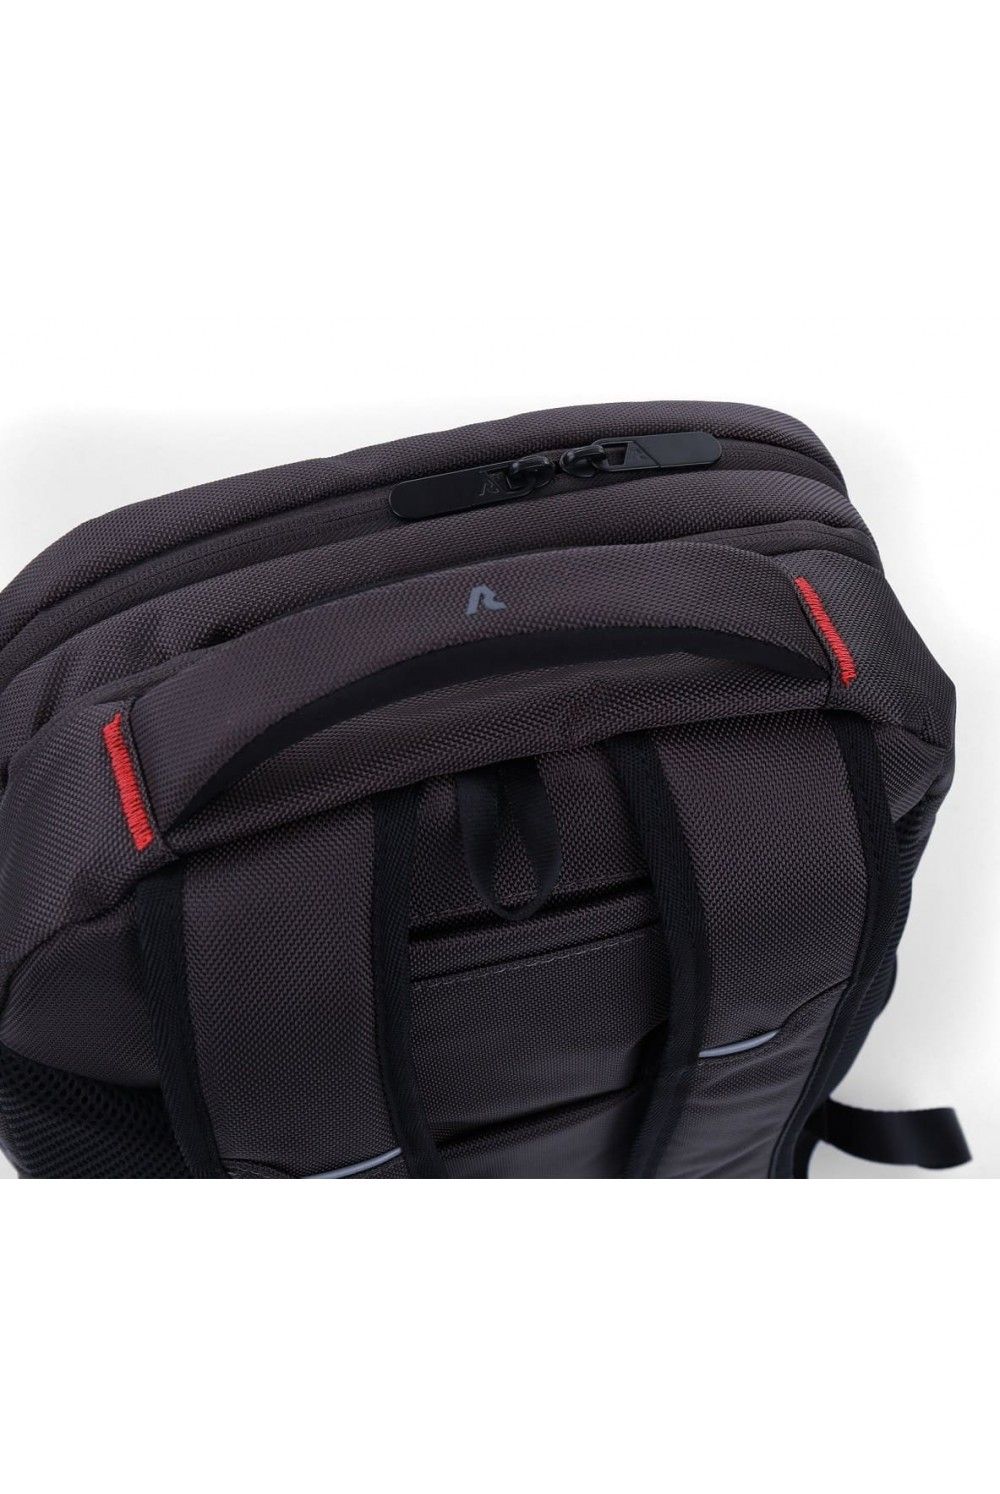 Roncato laptop backpack ZAINO 2 15.6 inches